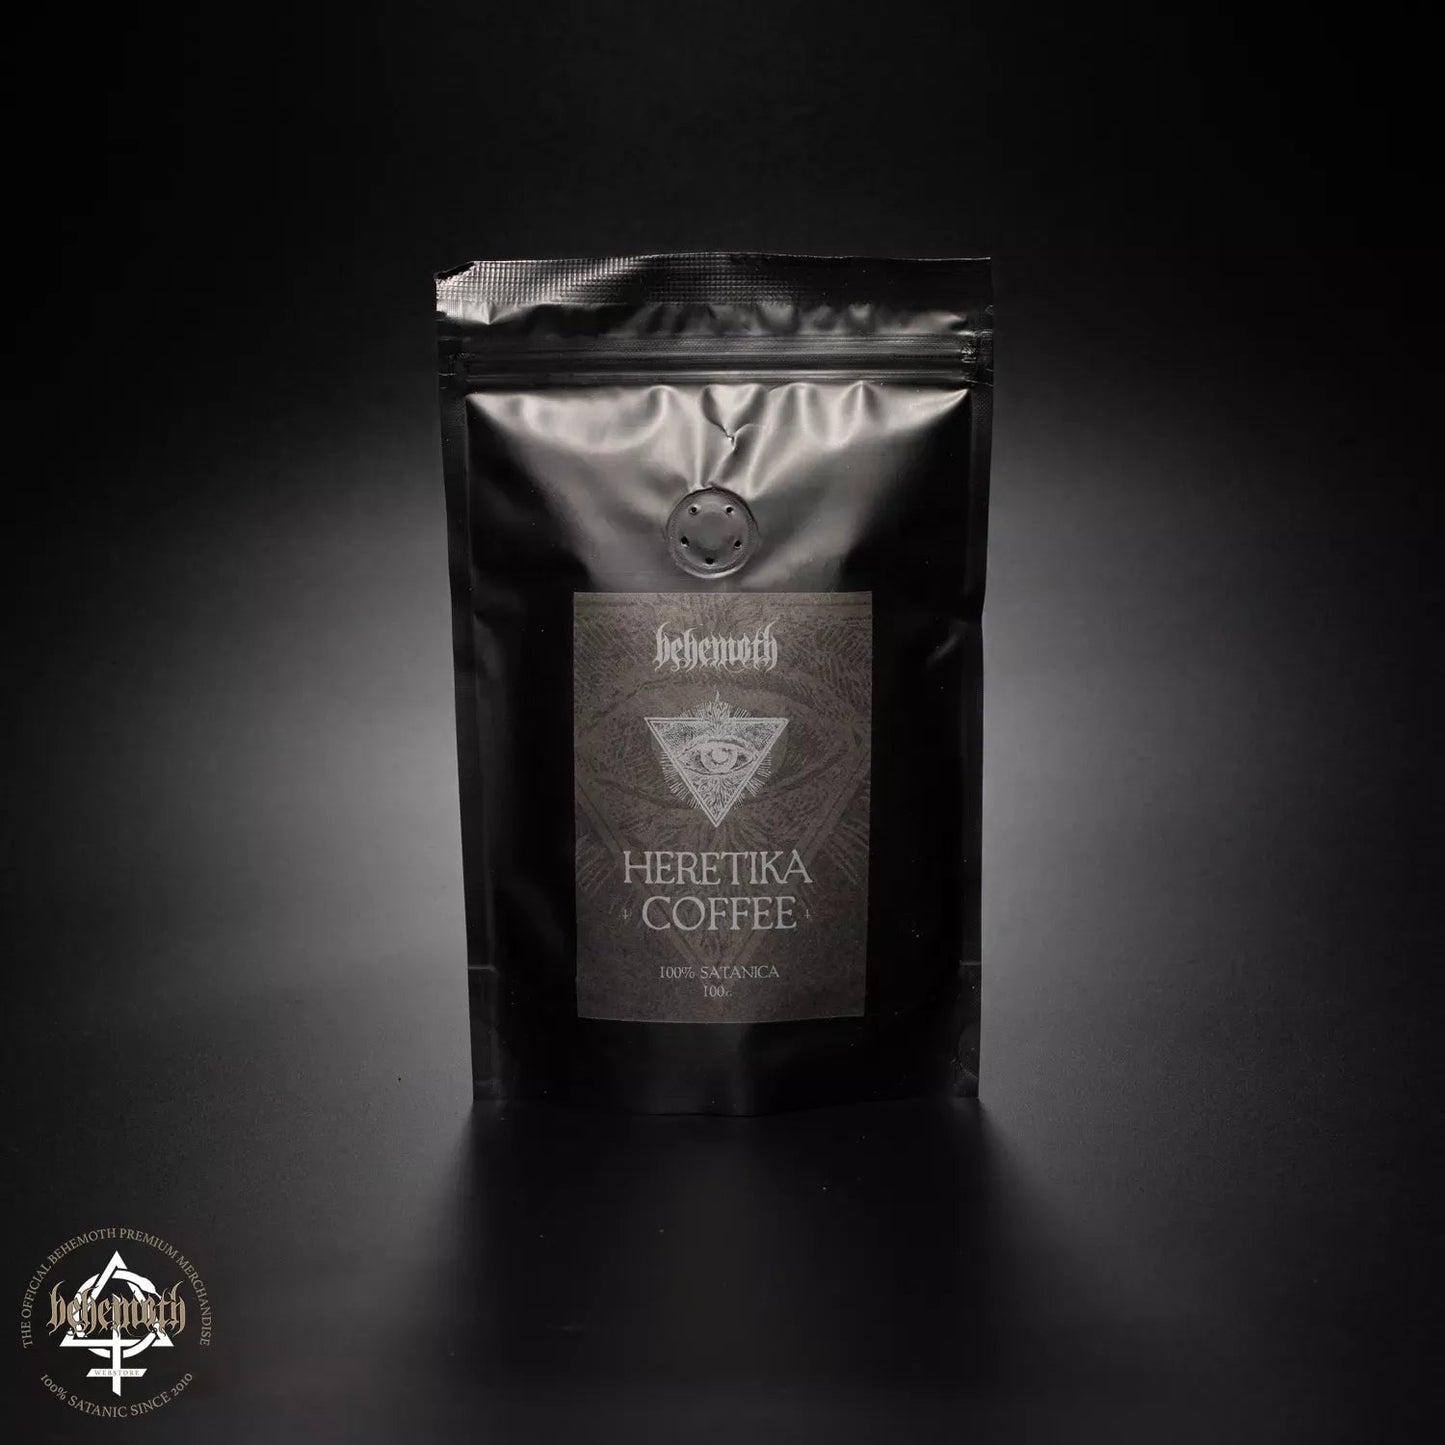 Behemoth 'Heretica' whole beans coffee - 100g